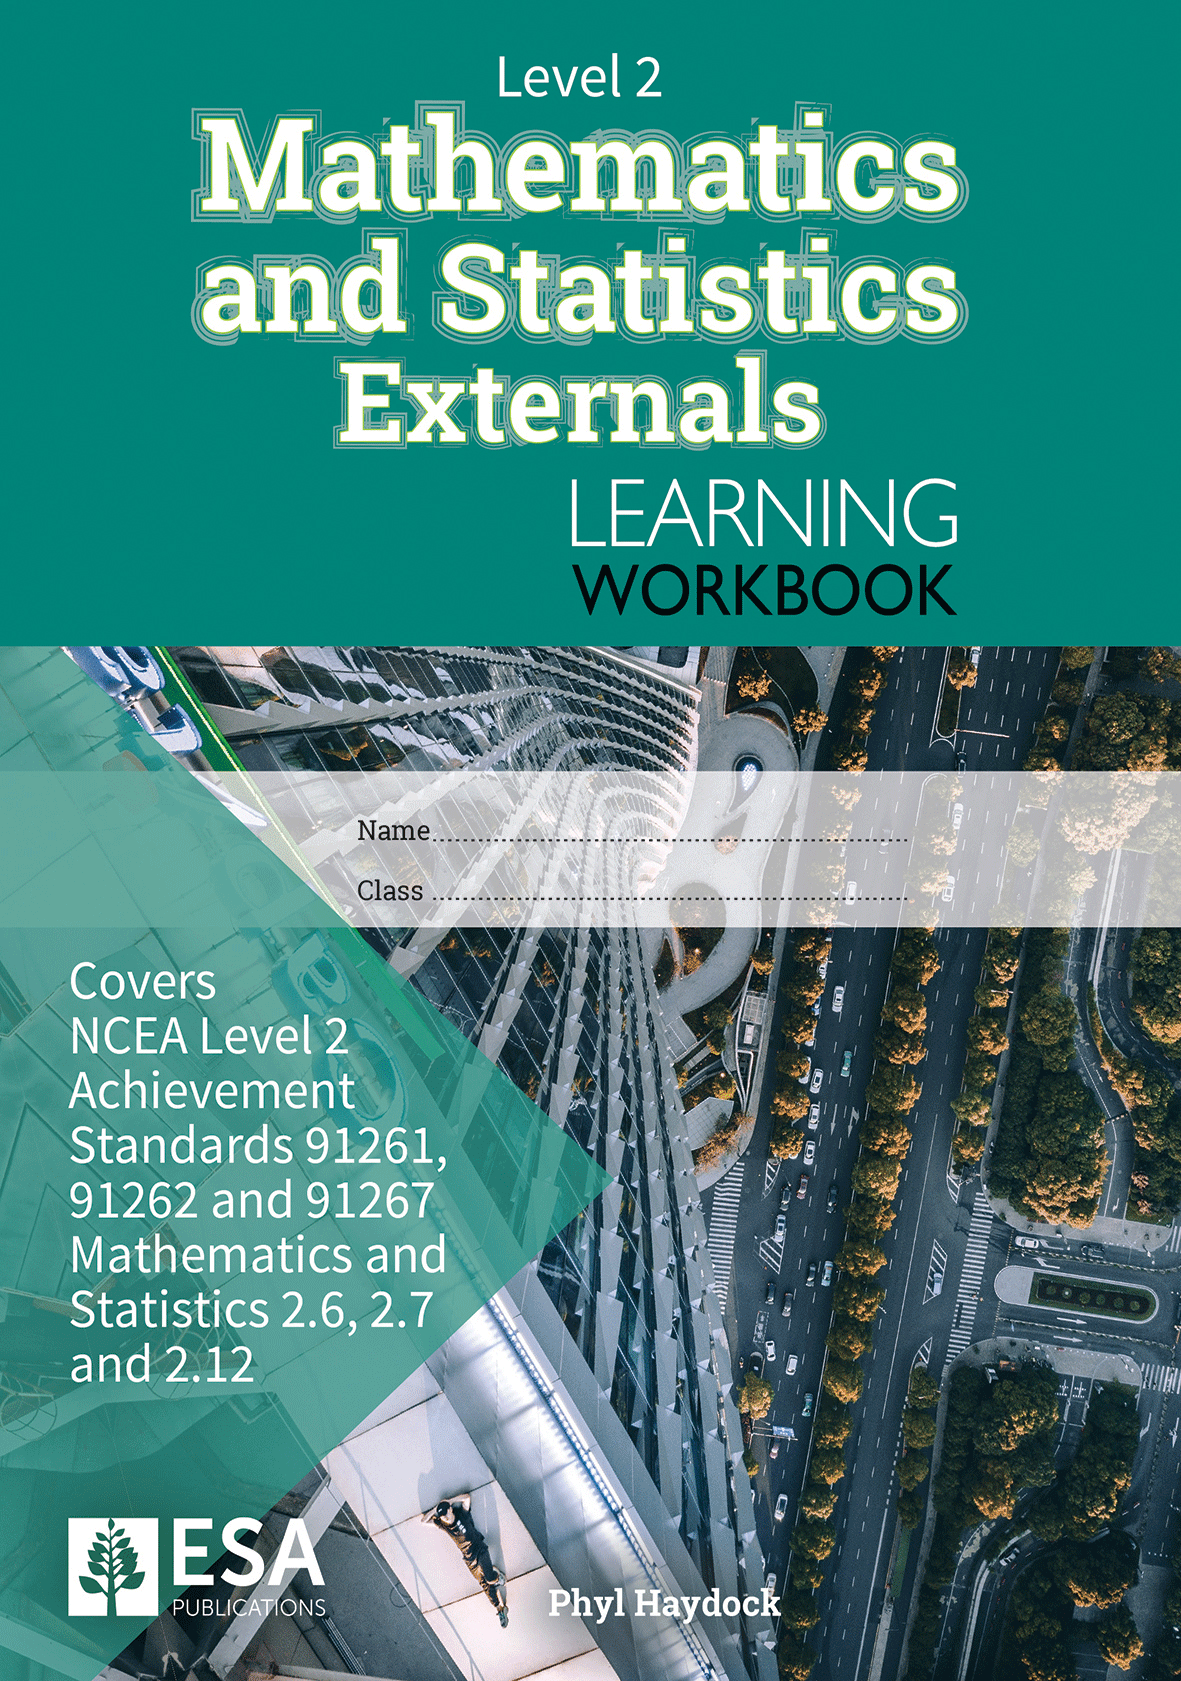 Level 2 Mathematics and Statistics Externals Learning Workbook